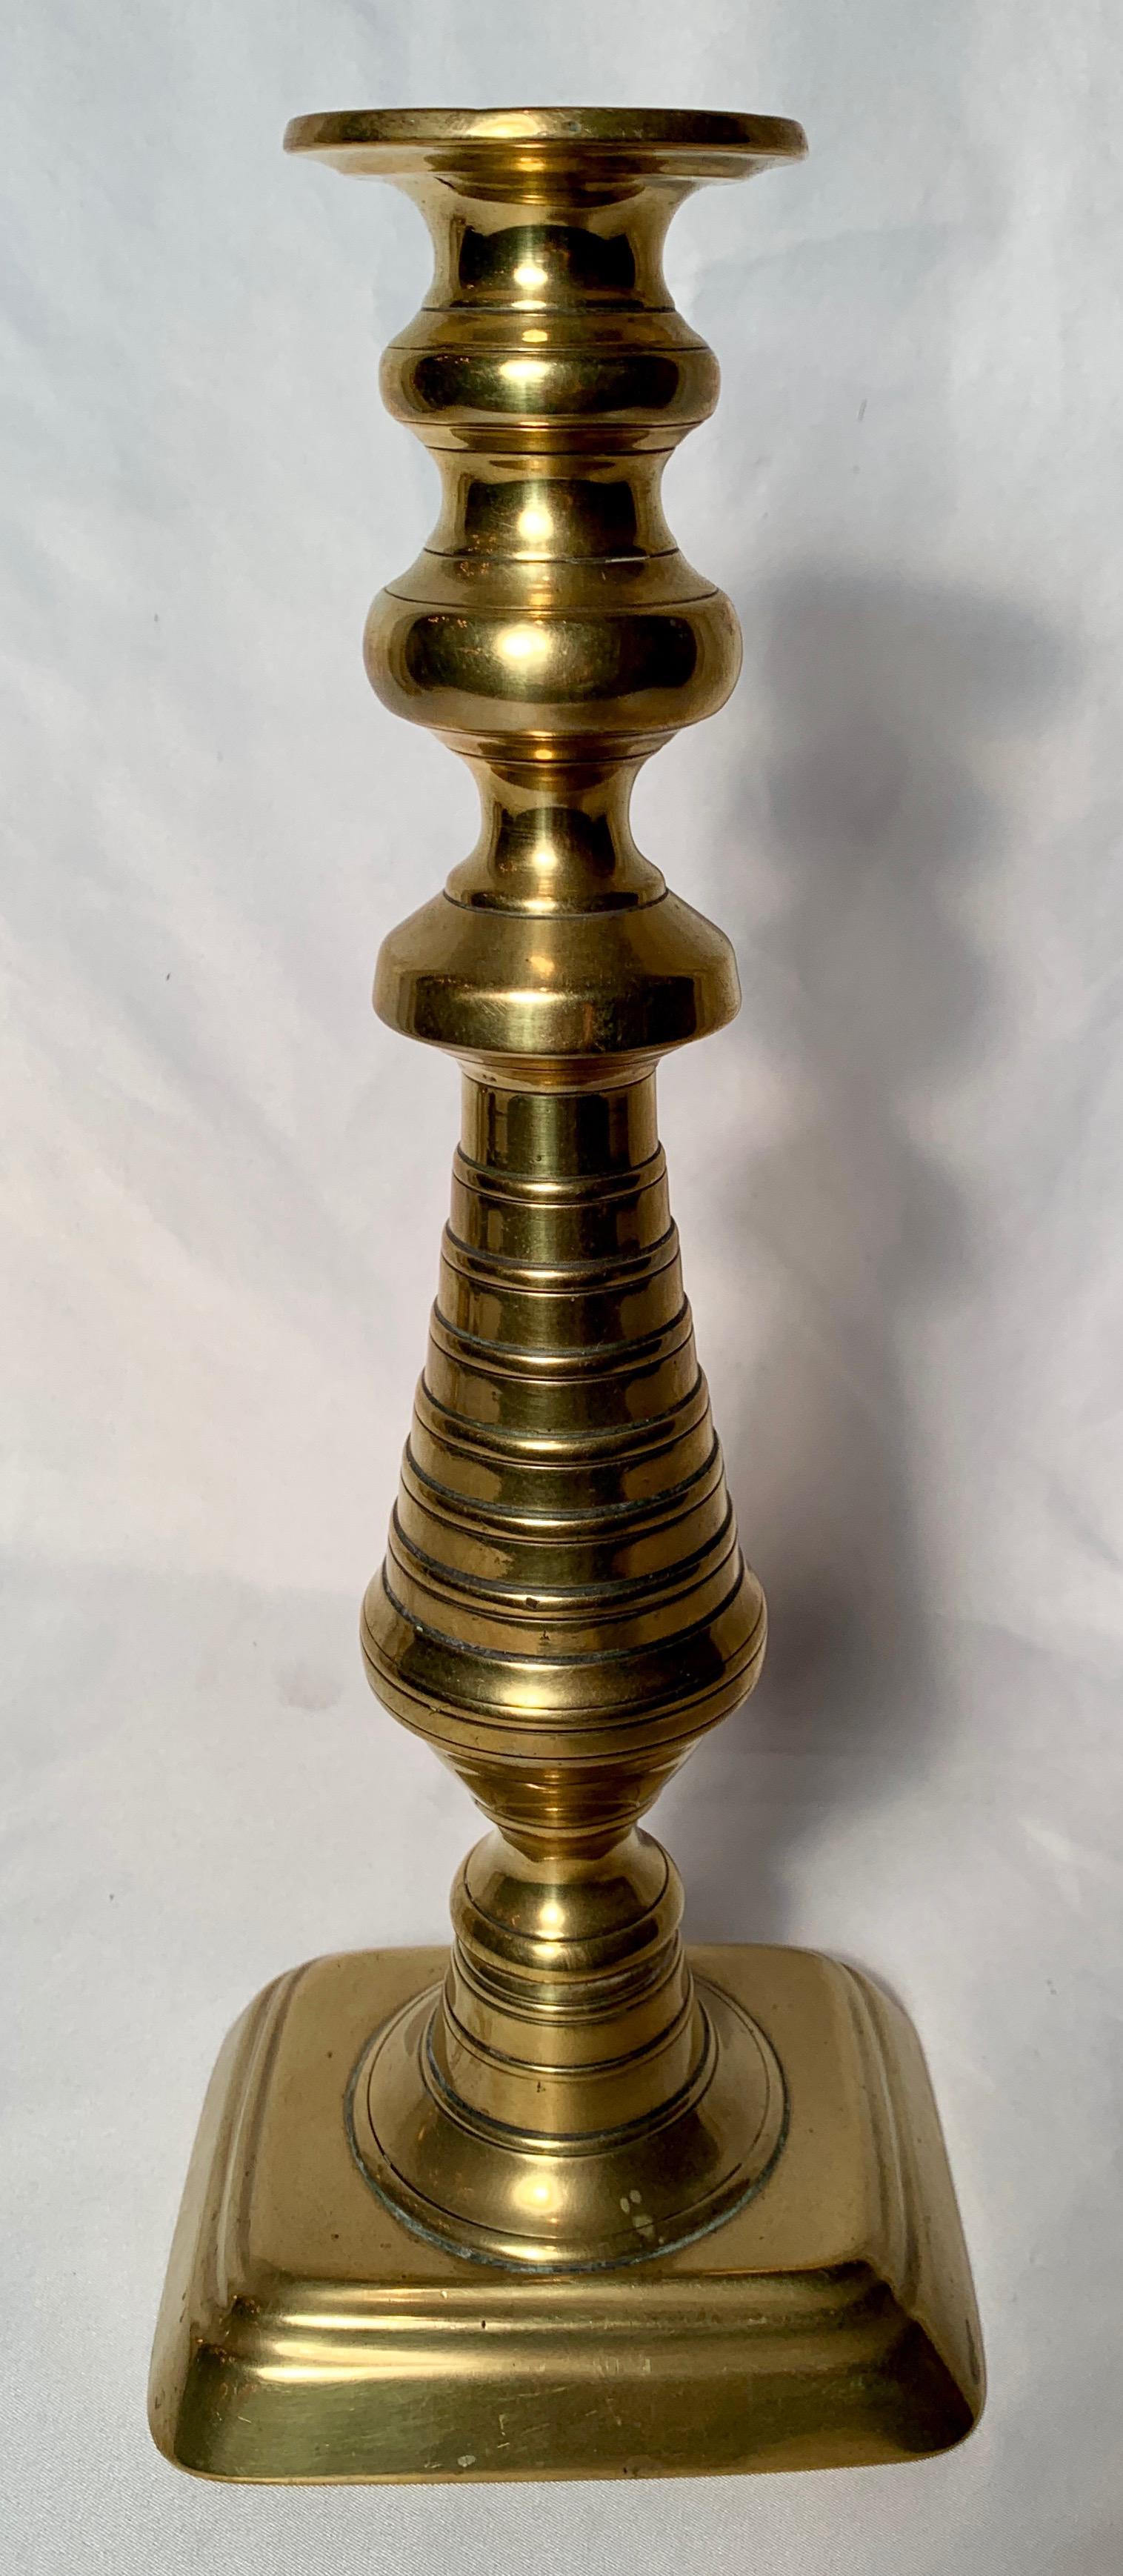 Pair of antique English Victorian brass candlesticks, circa 1880.
  
   